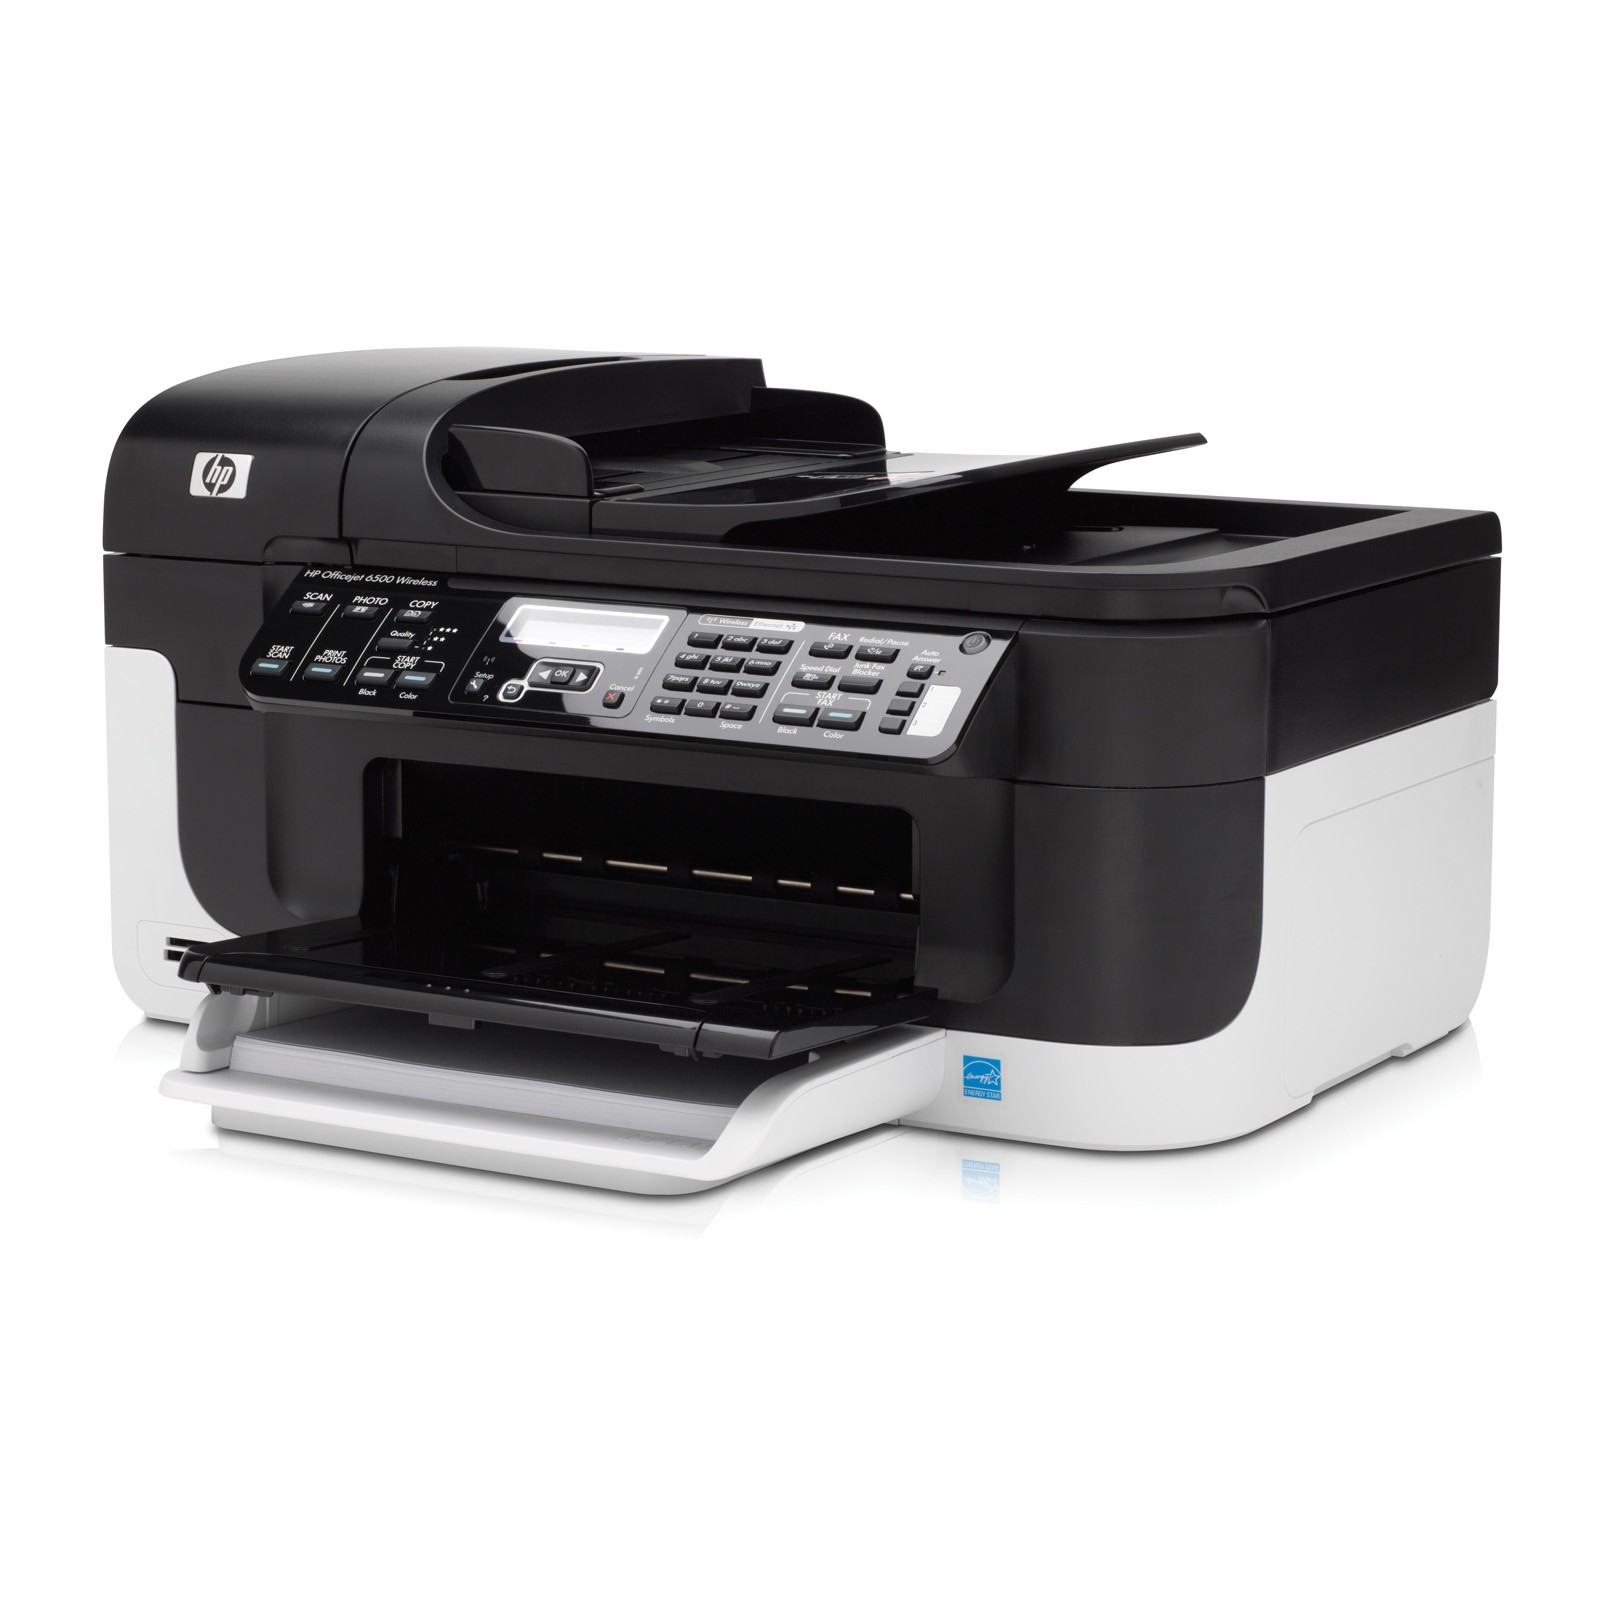  HP Officejet 6500 Wireless All-in-One Printer - E709n